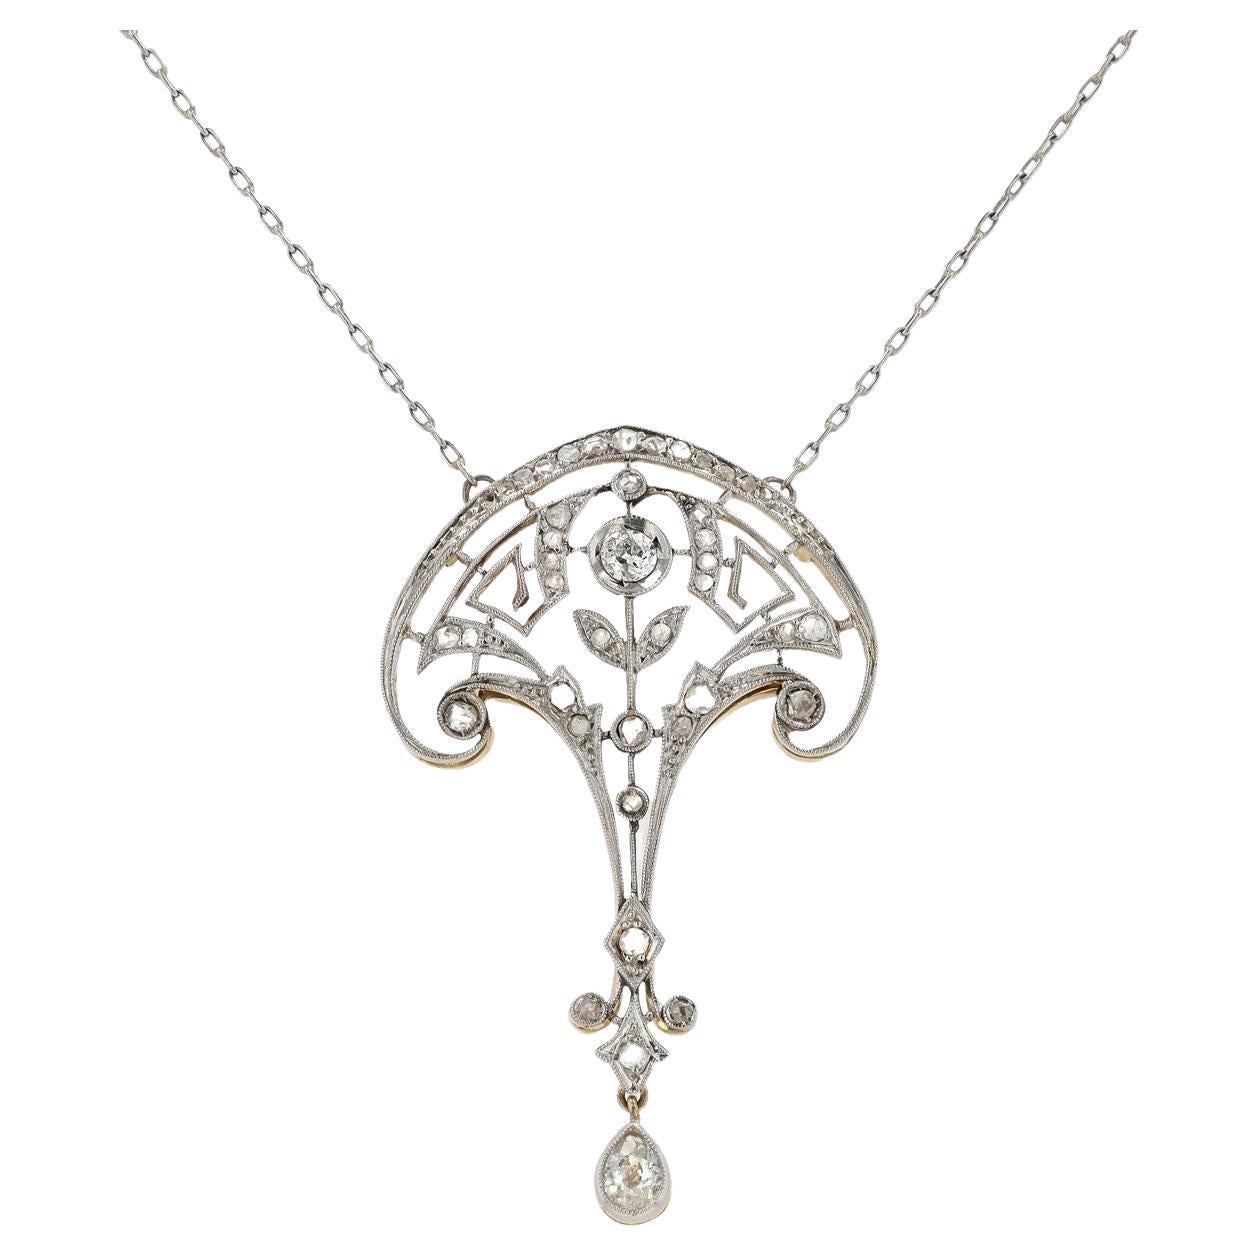 Edwardian Diamond Lavalier Platinum Pendant Necklace